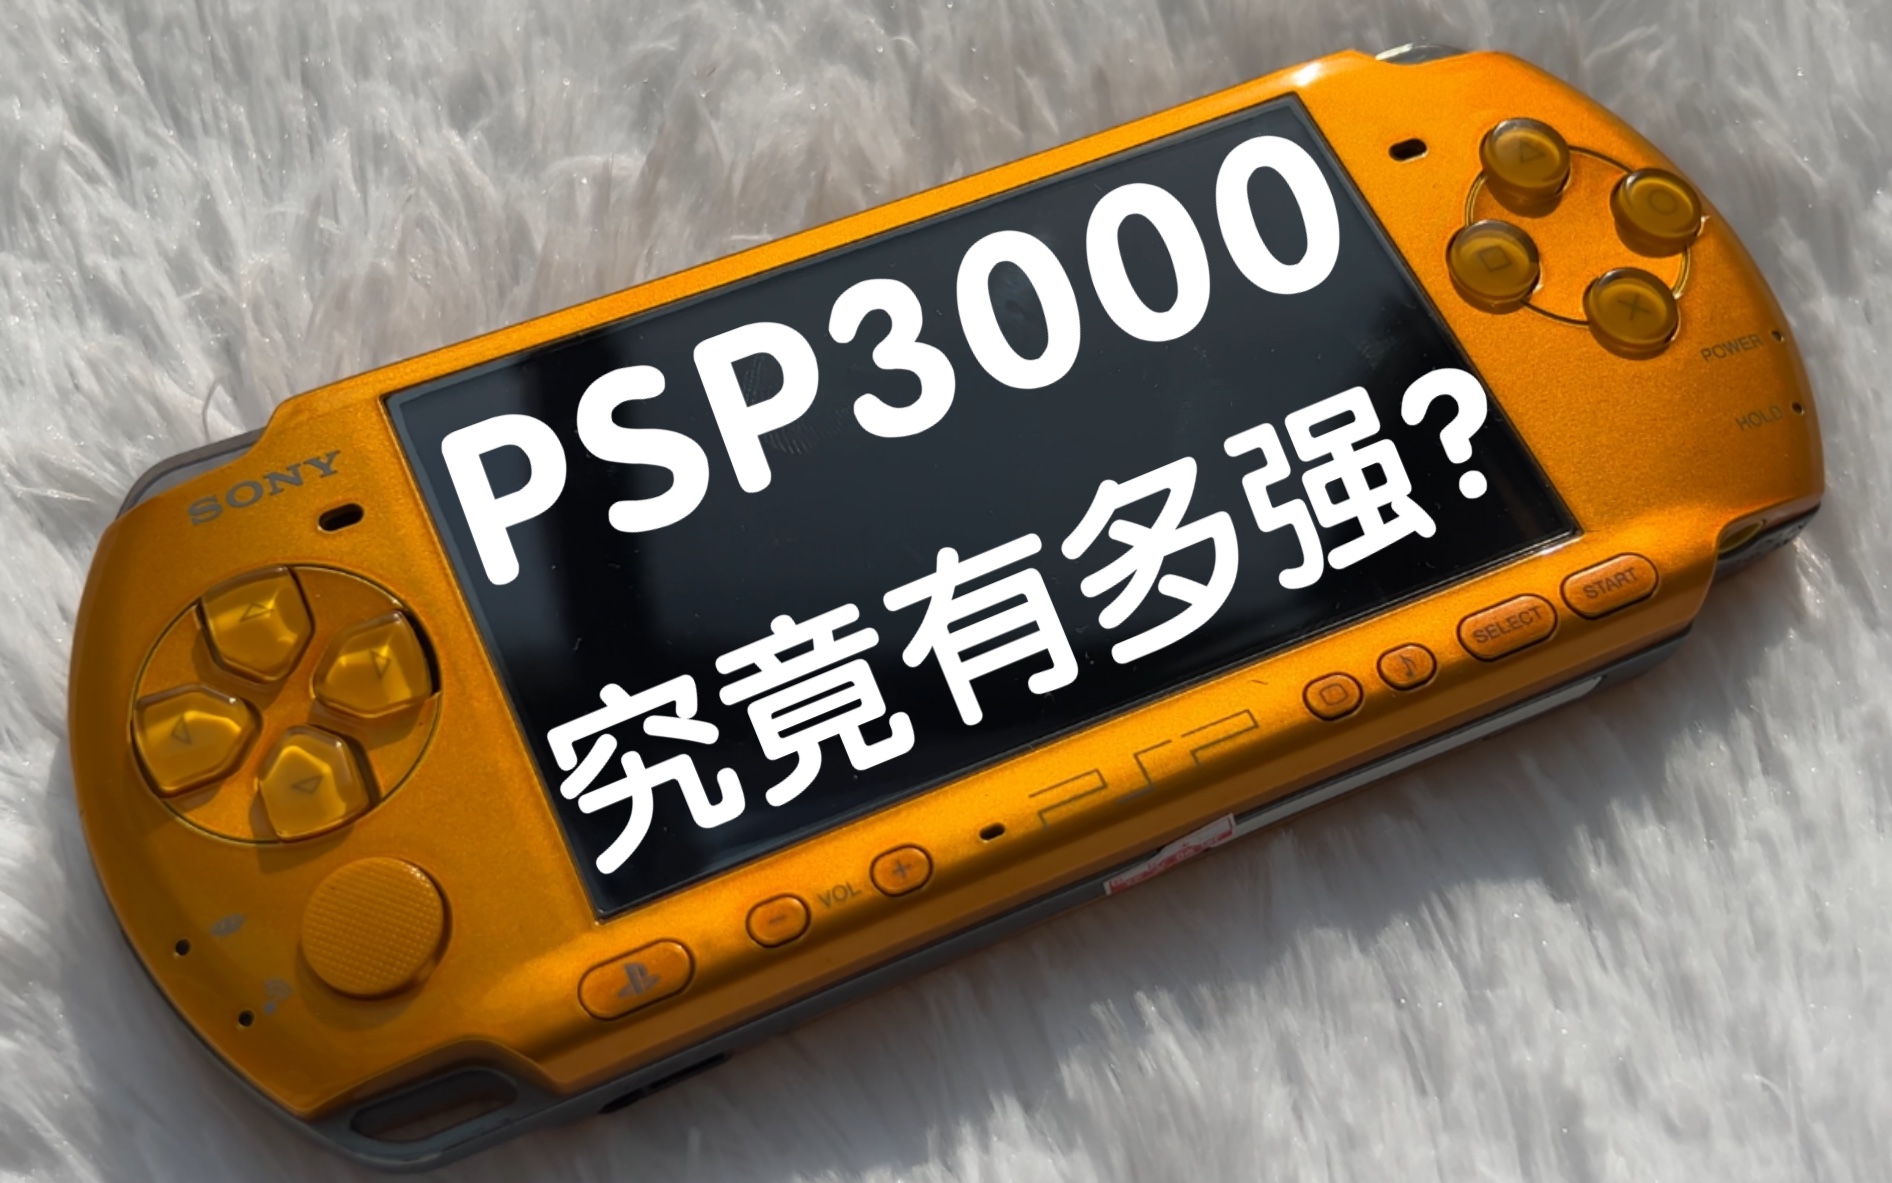 PS5、switch买不起怎么办？学生党500元以内的游戏机有什么选择？购买之前需要做好哪些心理准备？